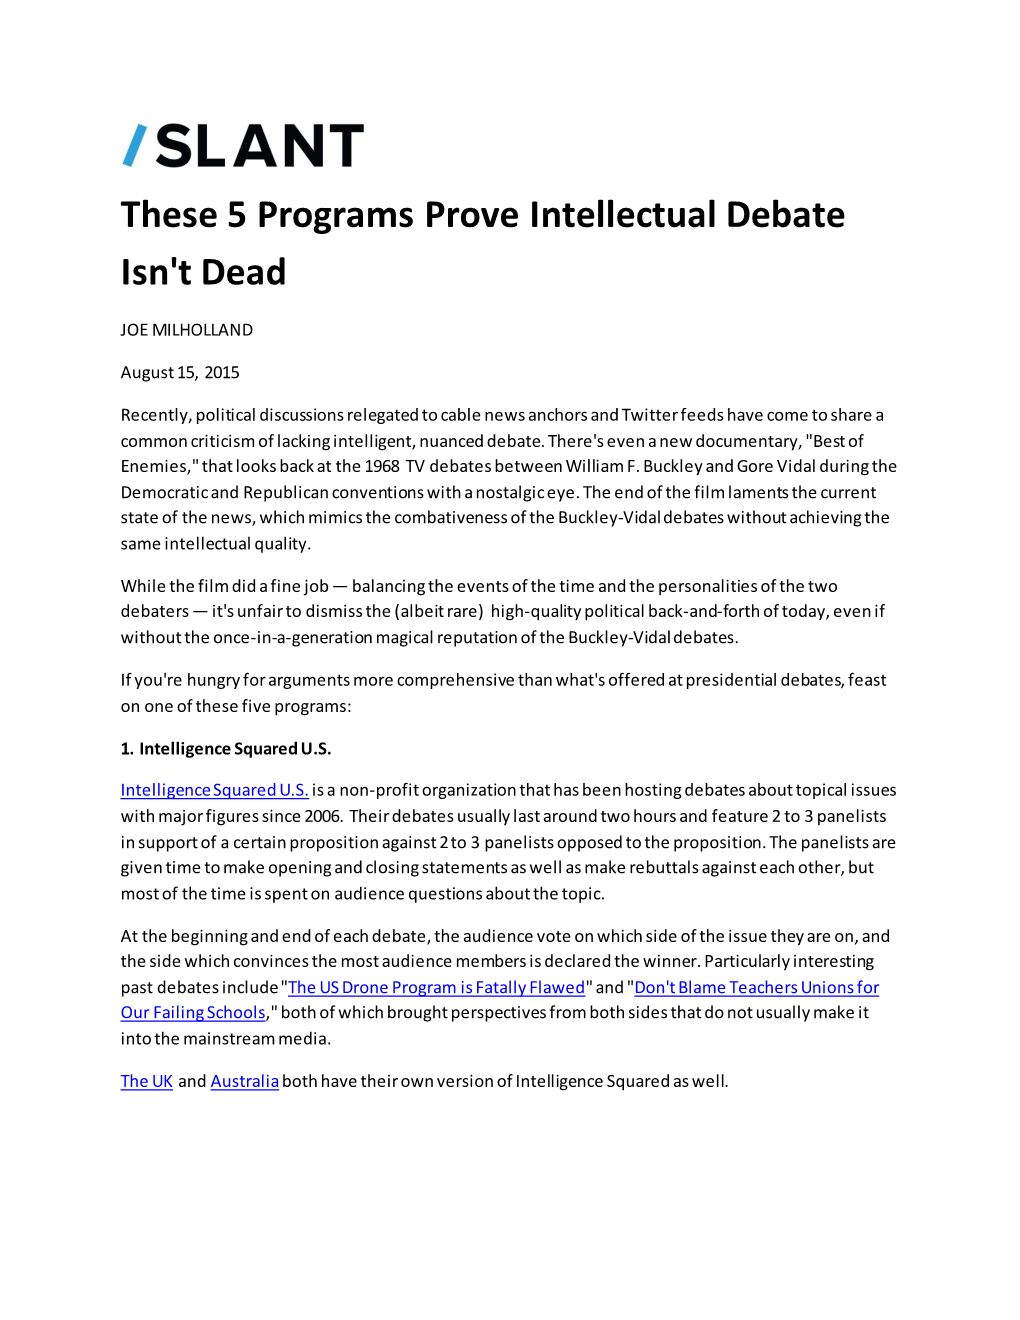 These 5 Programs Prove Intellectual Debate Isn't Dead